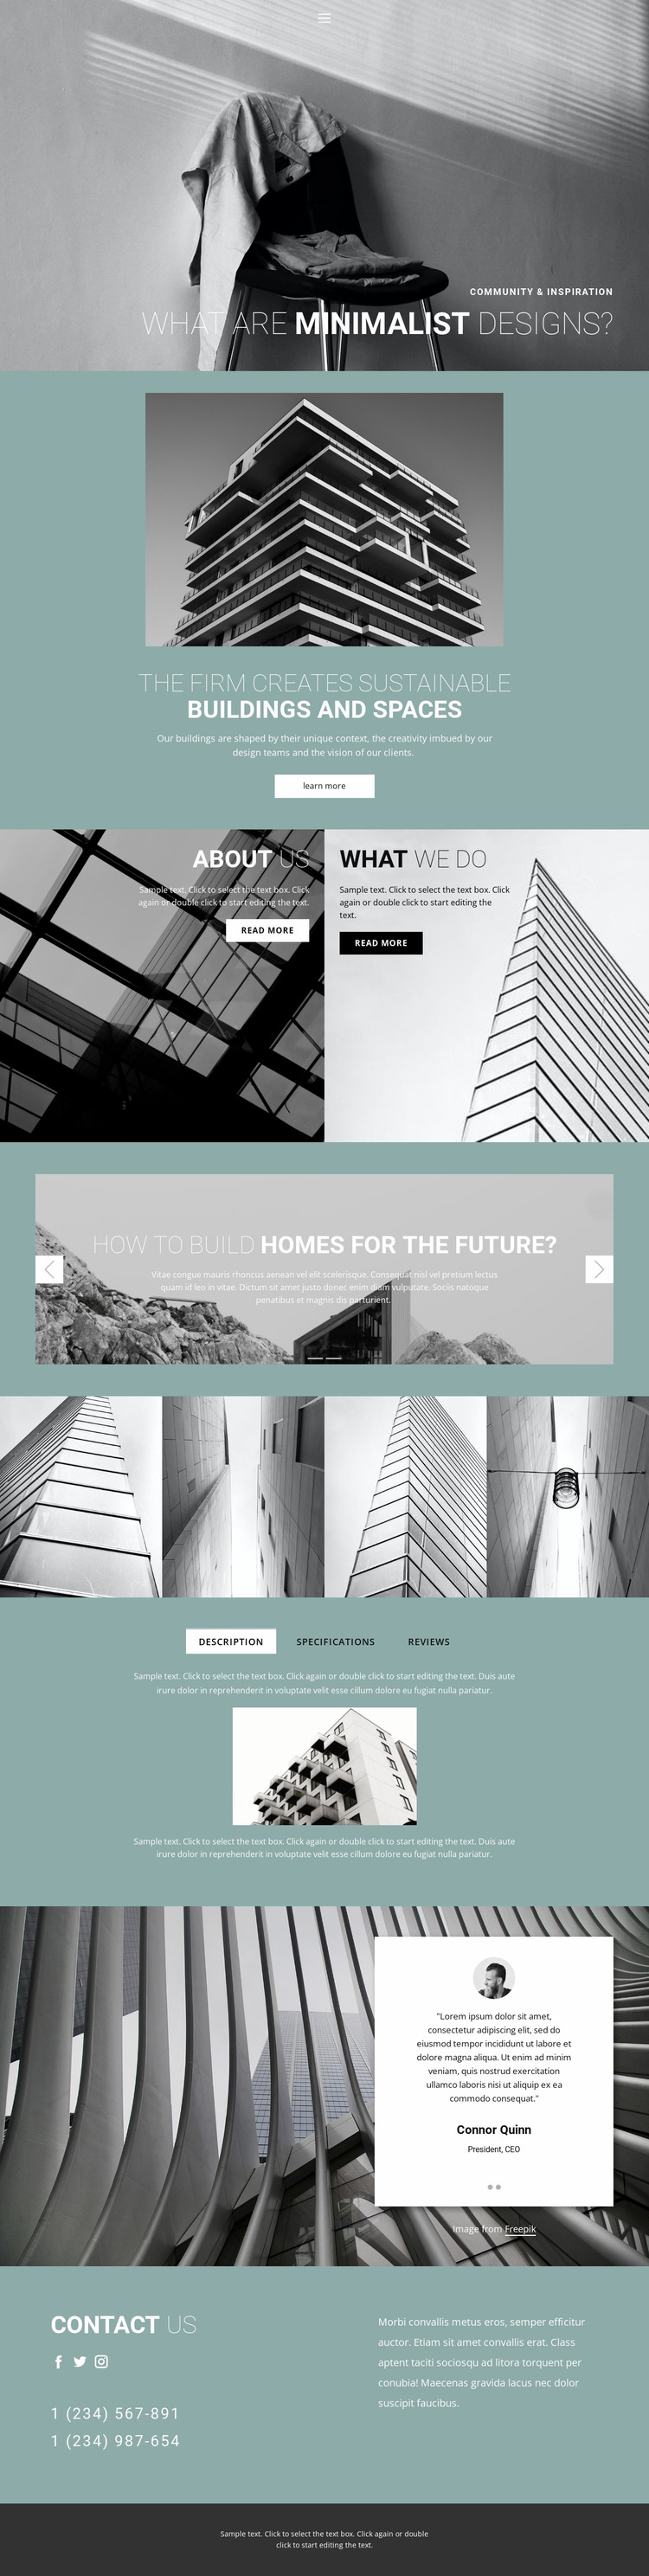 Perfect architecture ideas Website Mockup